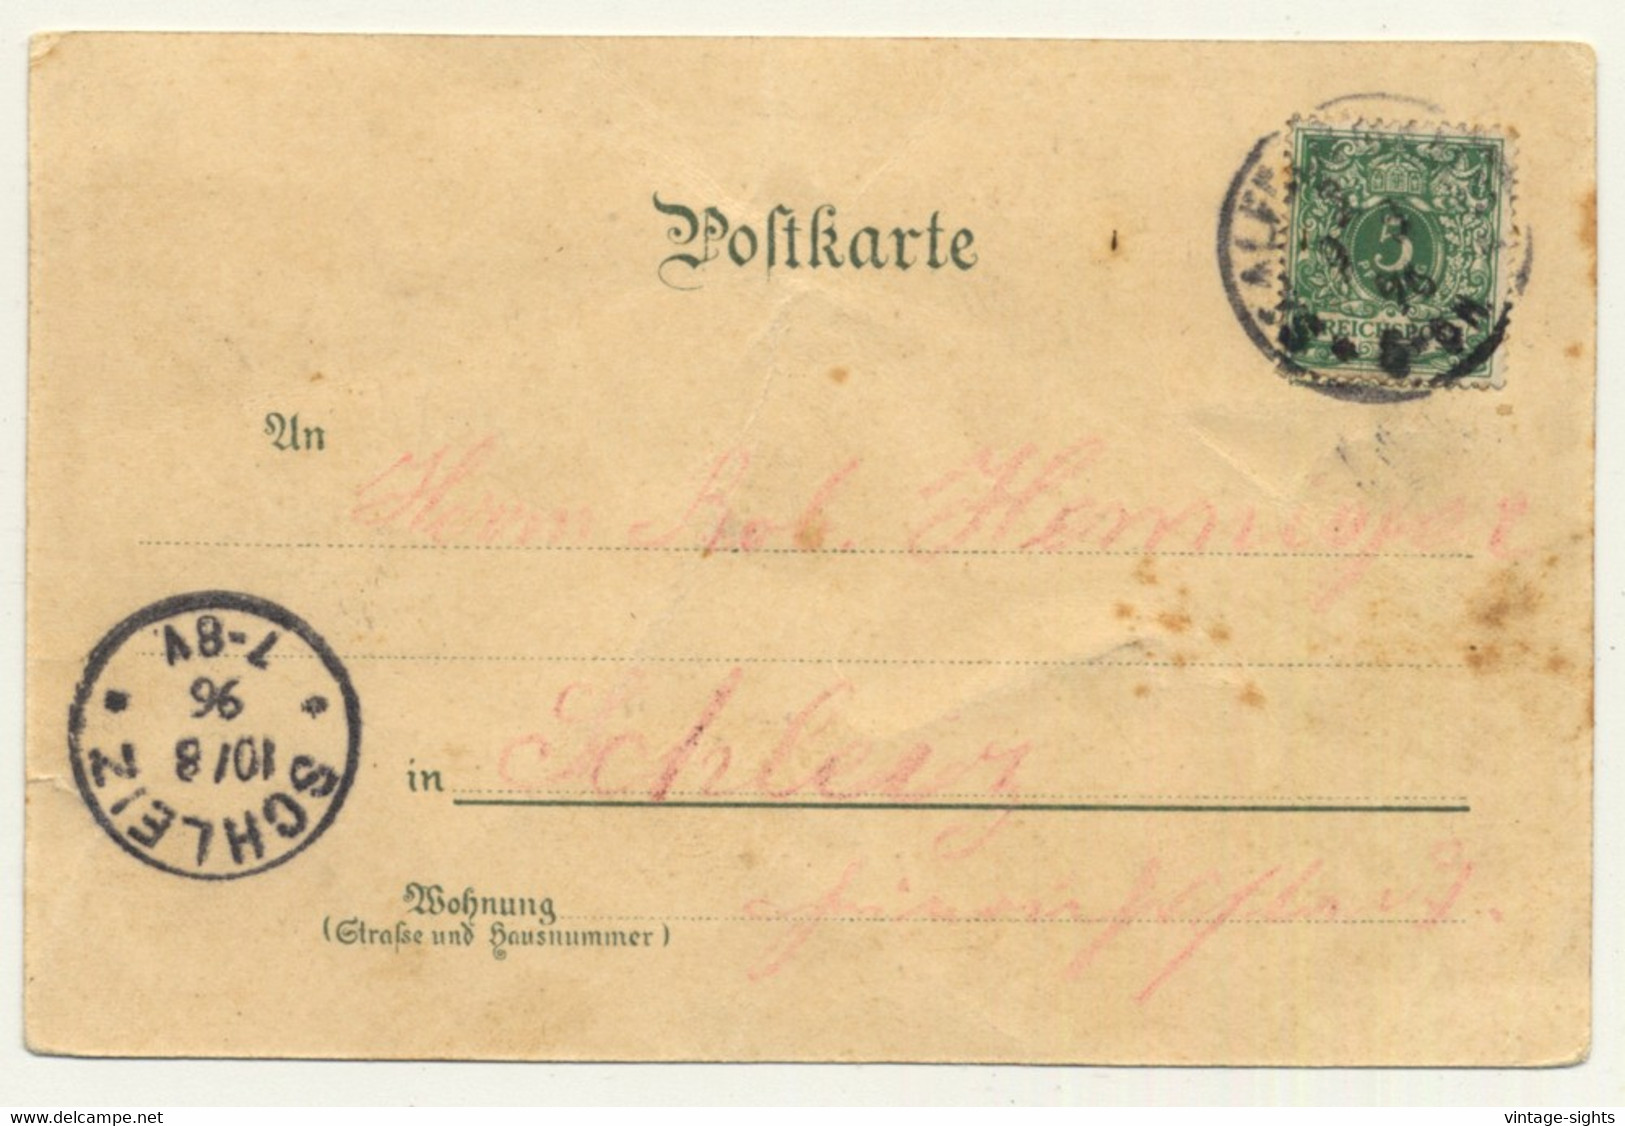 Gruss Vom Schützenfest - Rifle Festival / Burger Bräu (Vintage Postcard Litho 1898) - Tiro (armas)